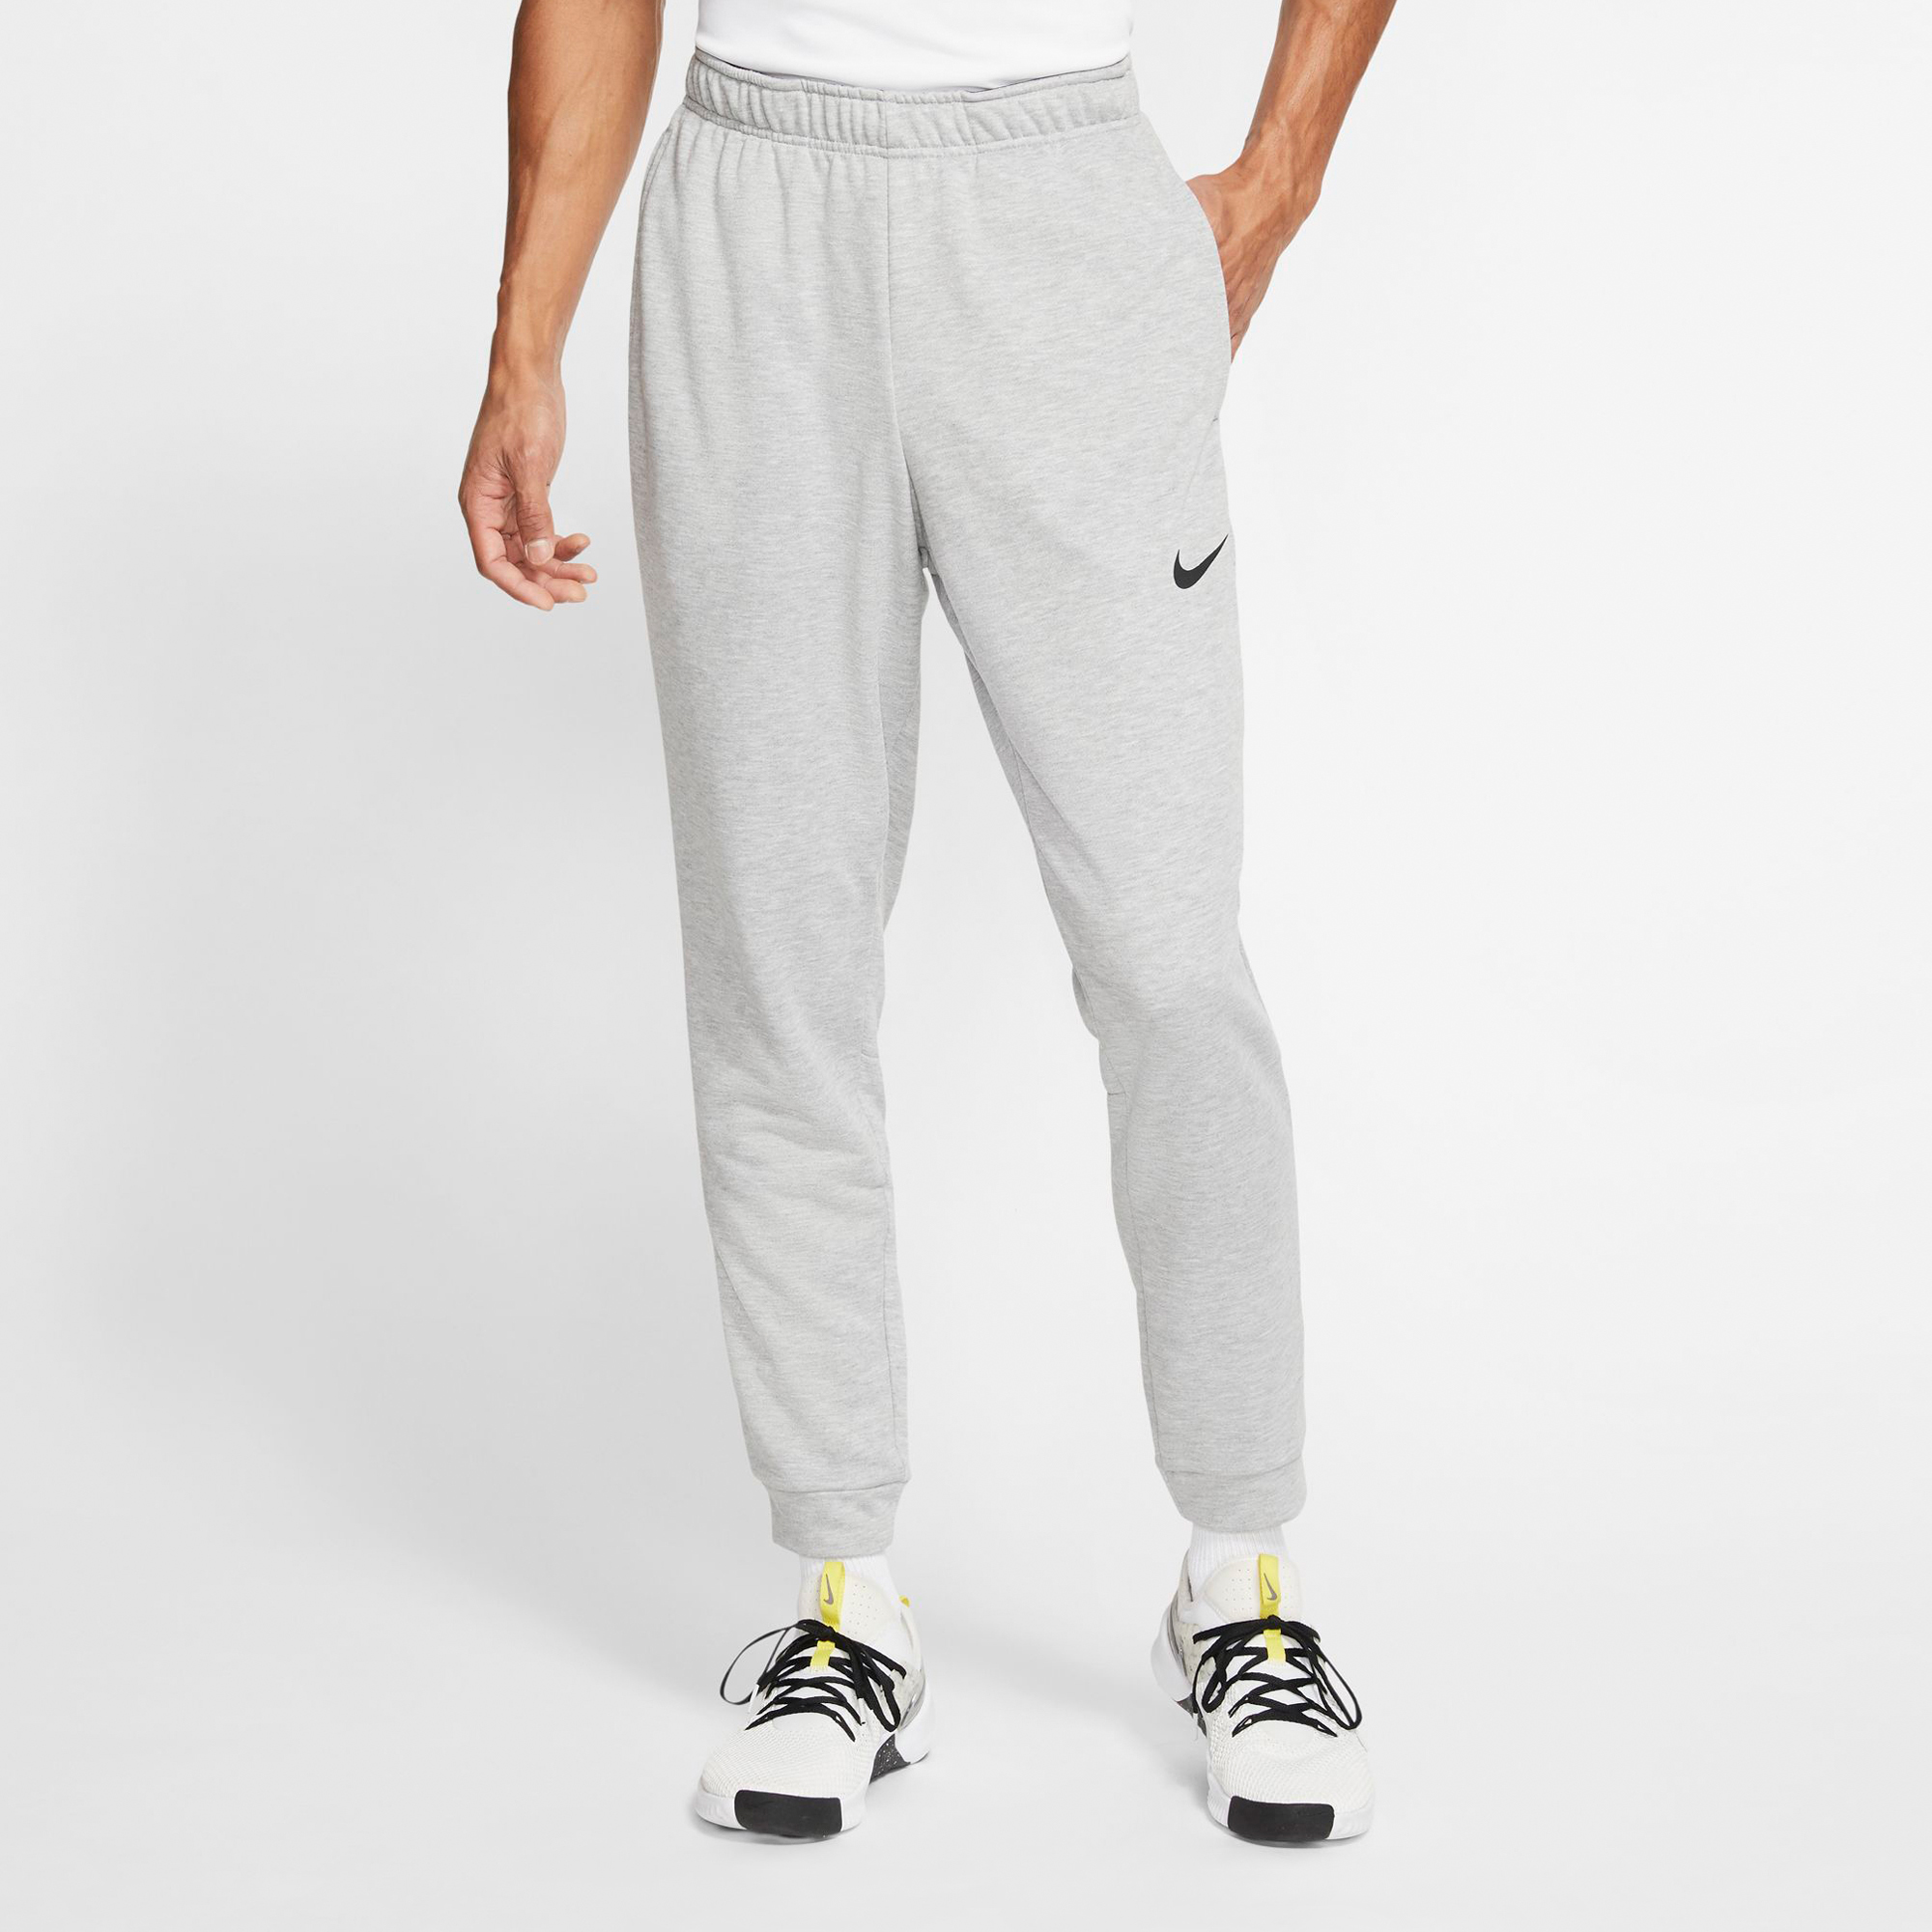 Nike Men's Dri-FIT Tapered Fleece Track Pant | Pants | Clothing | Mens ...